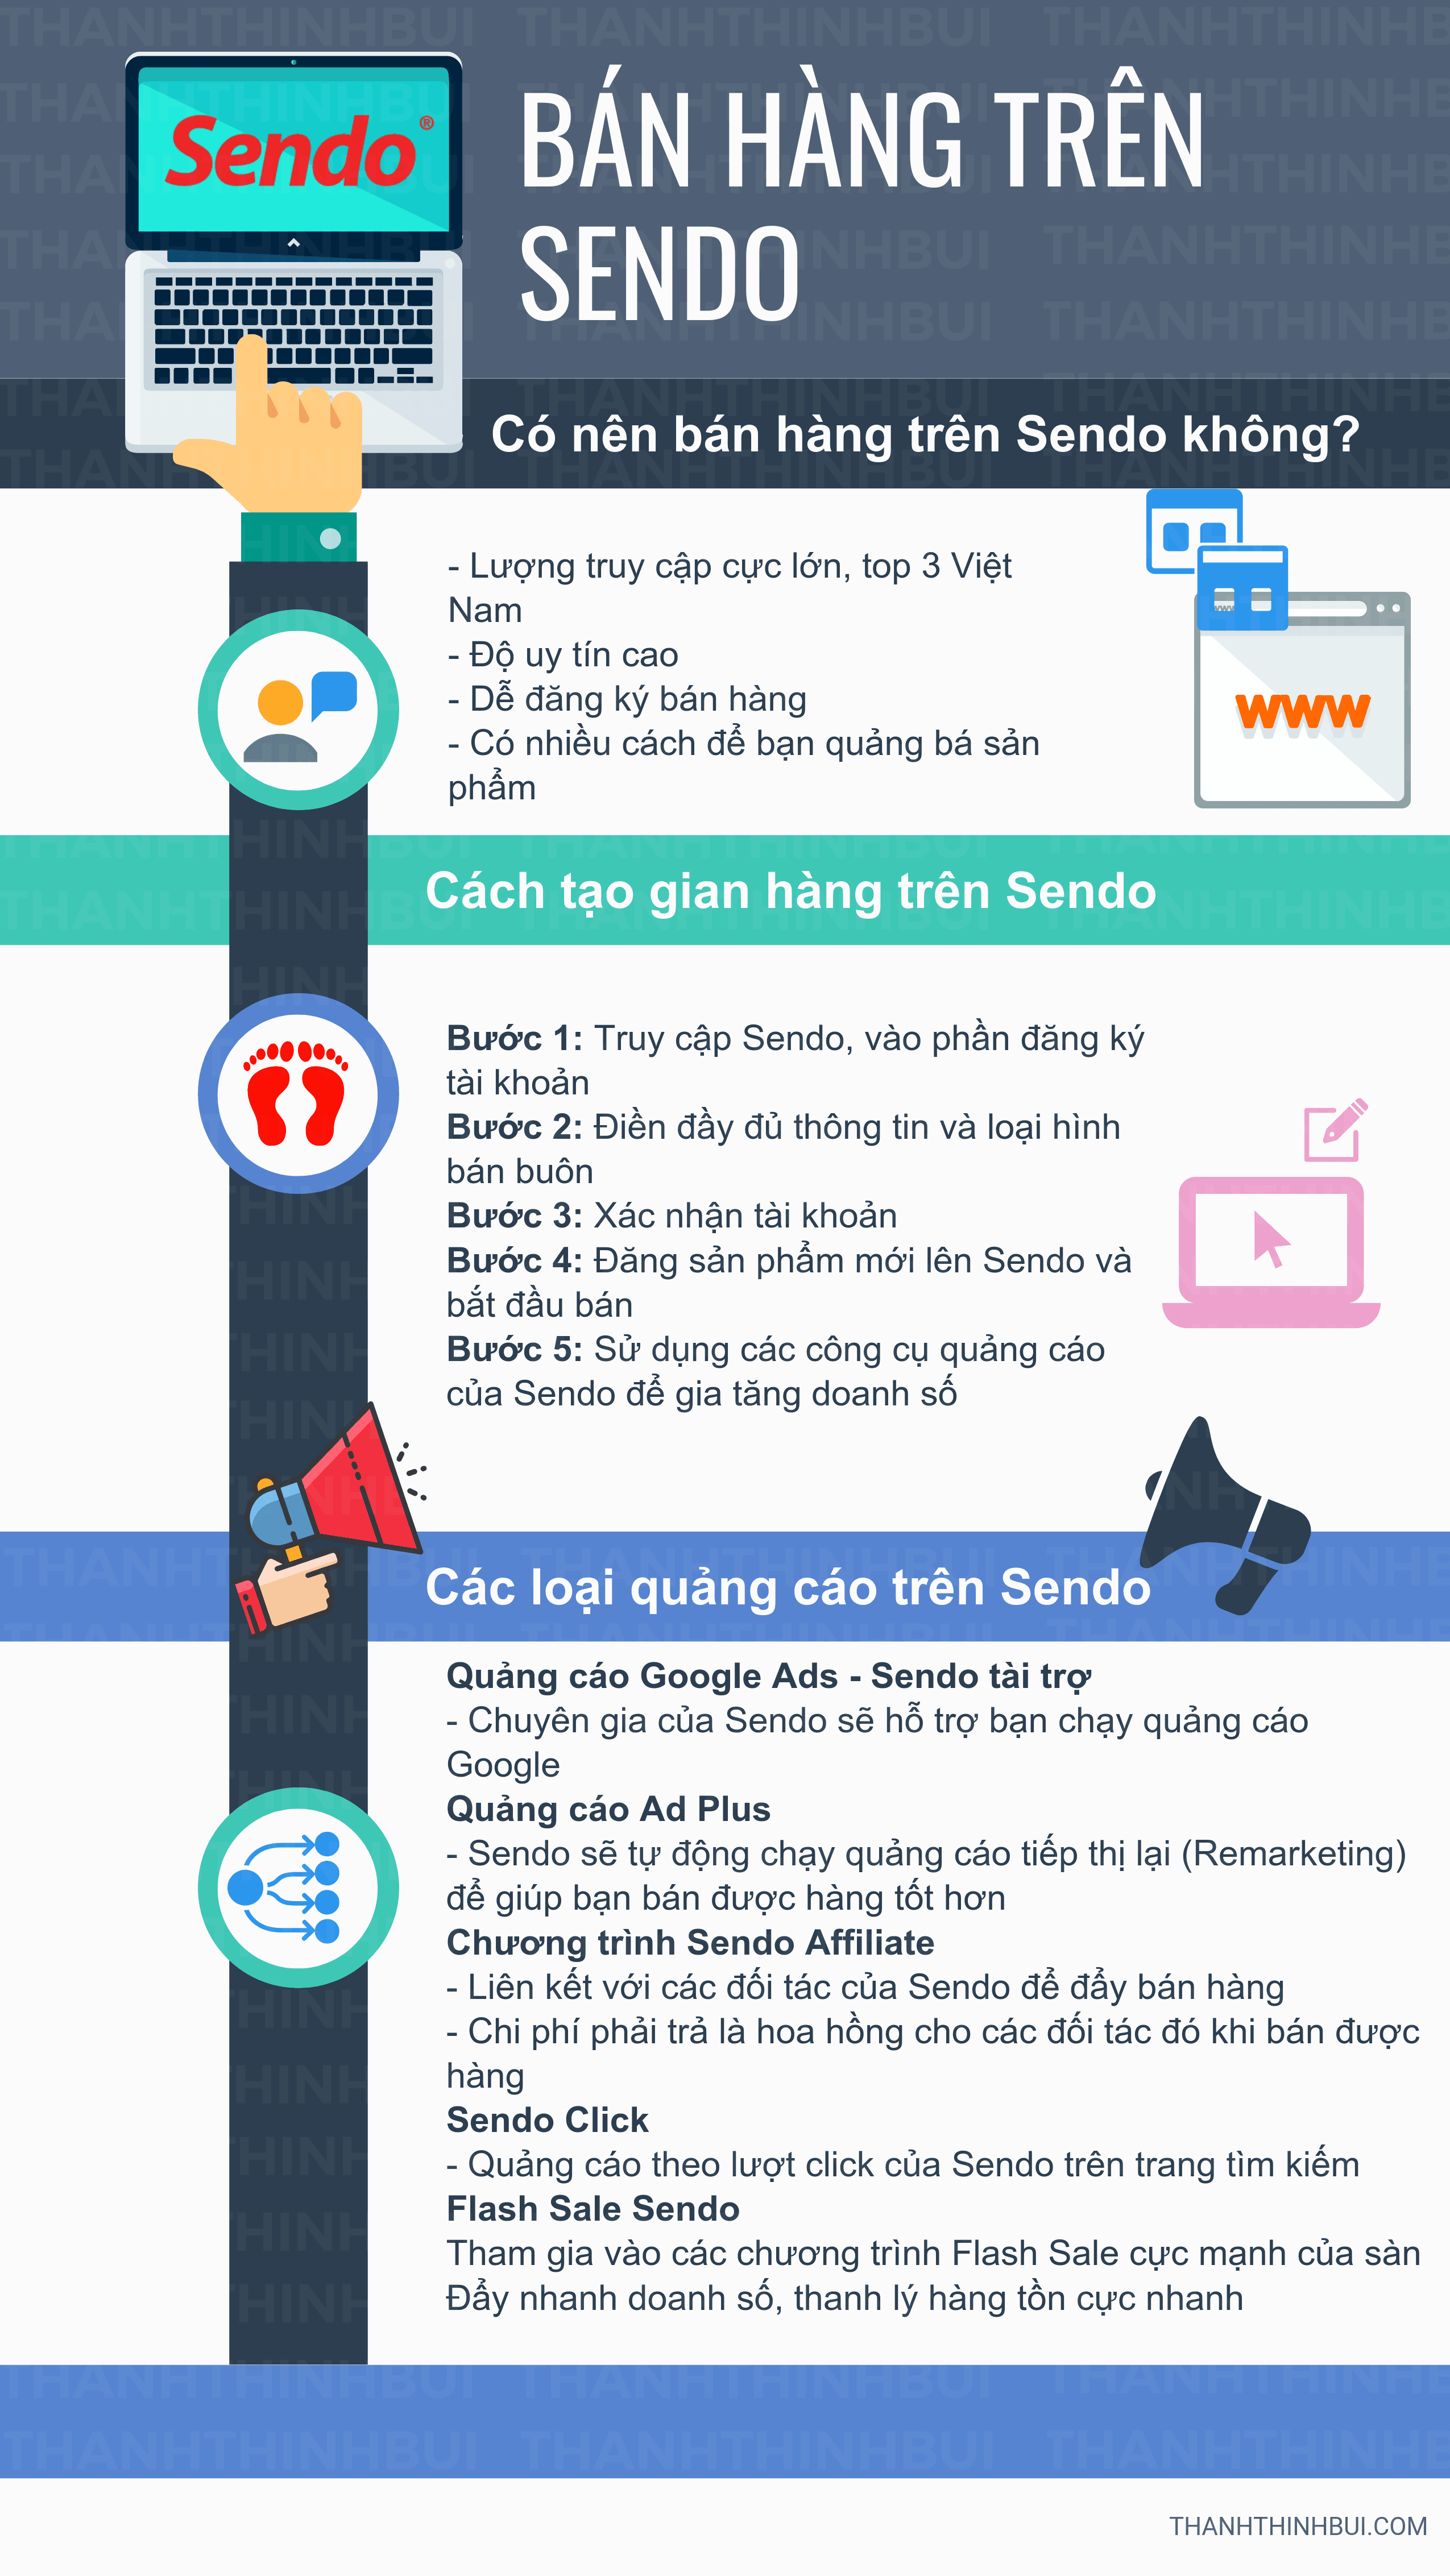 ban-hang-tren-sendo-infographic